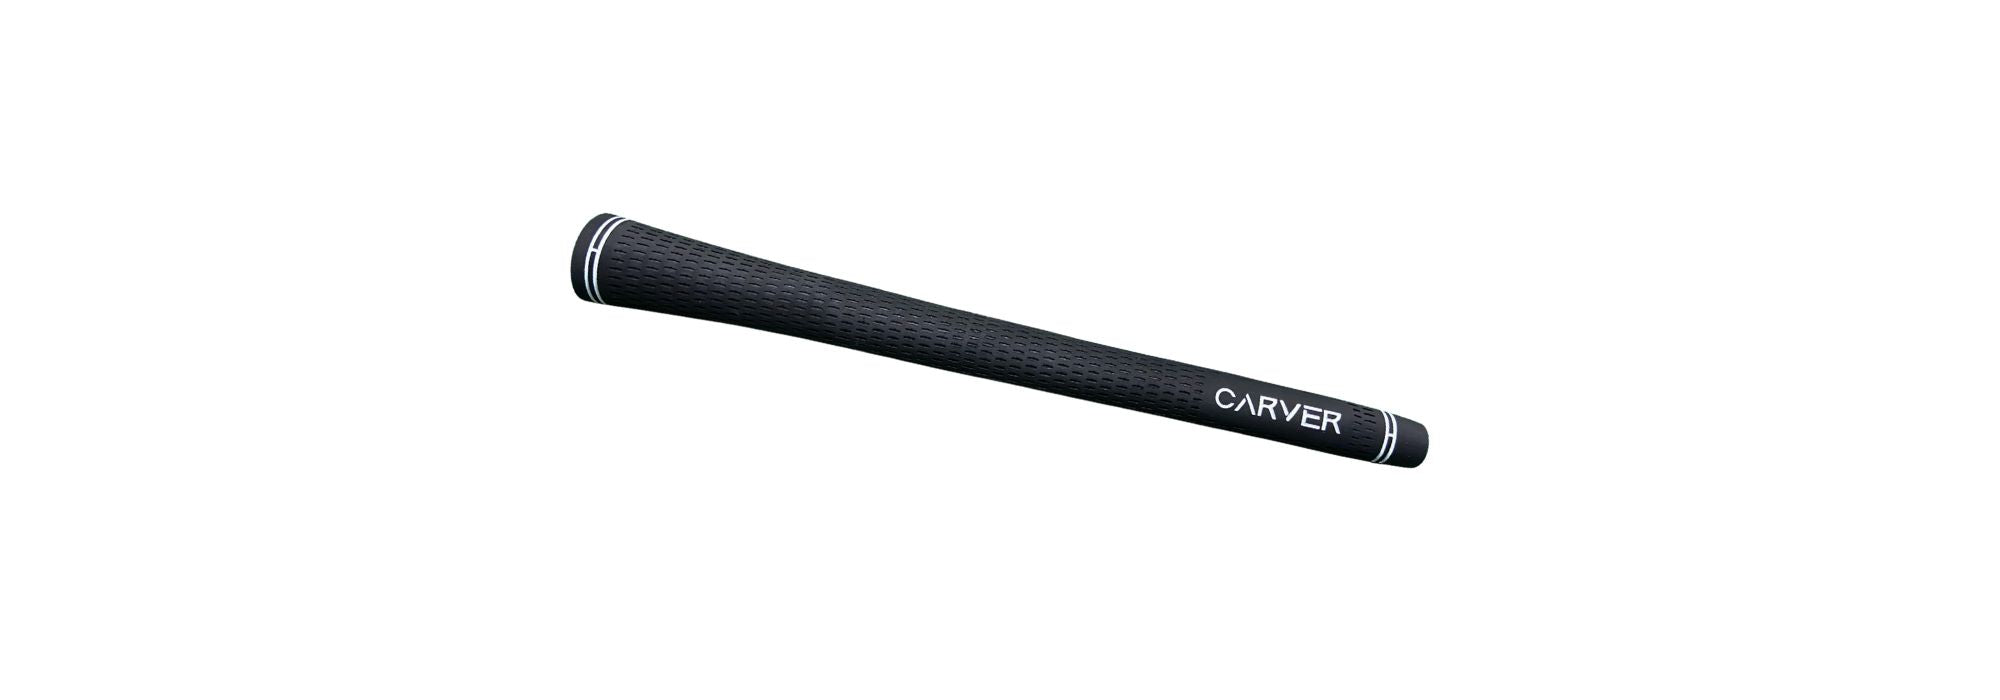 Carver grip 